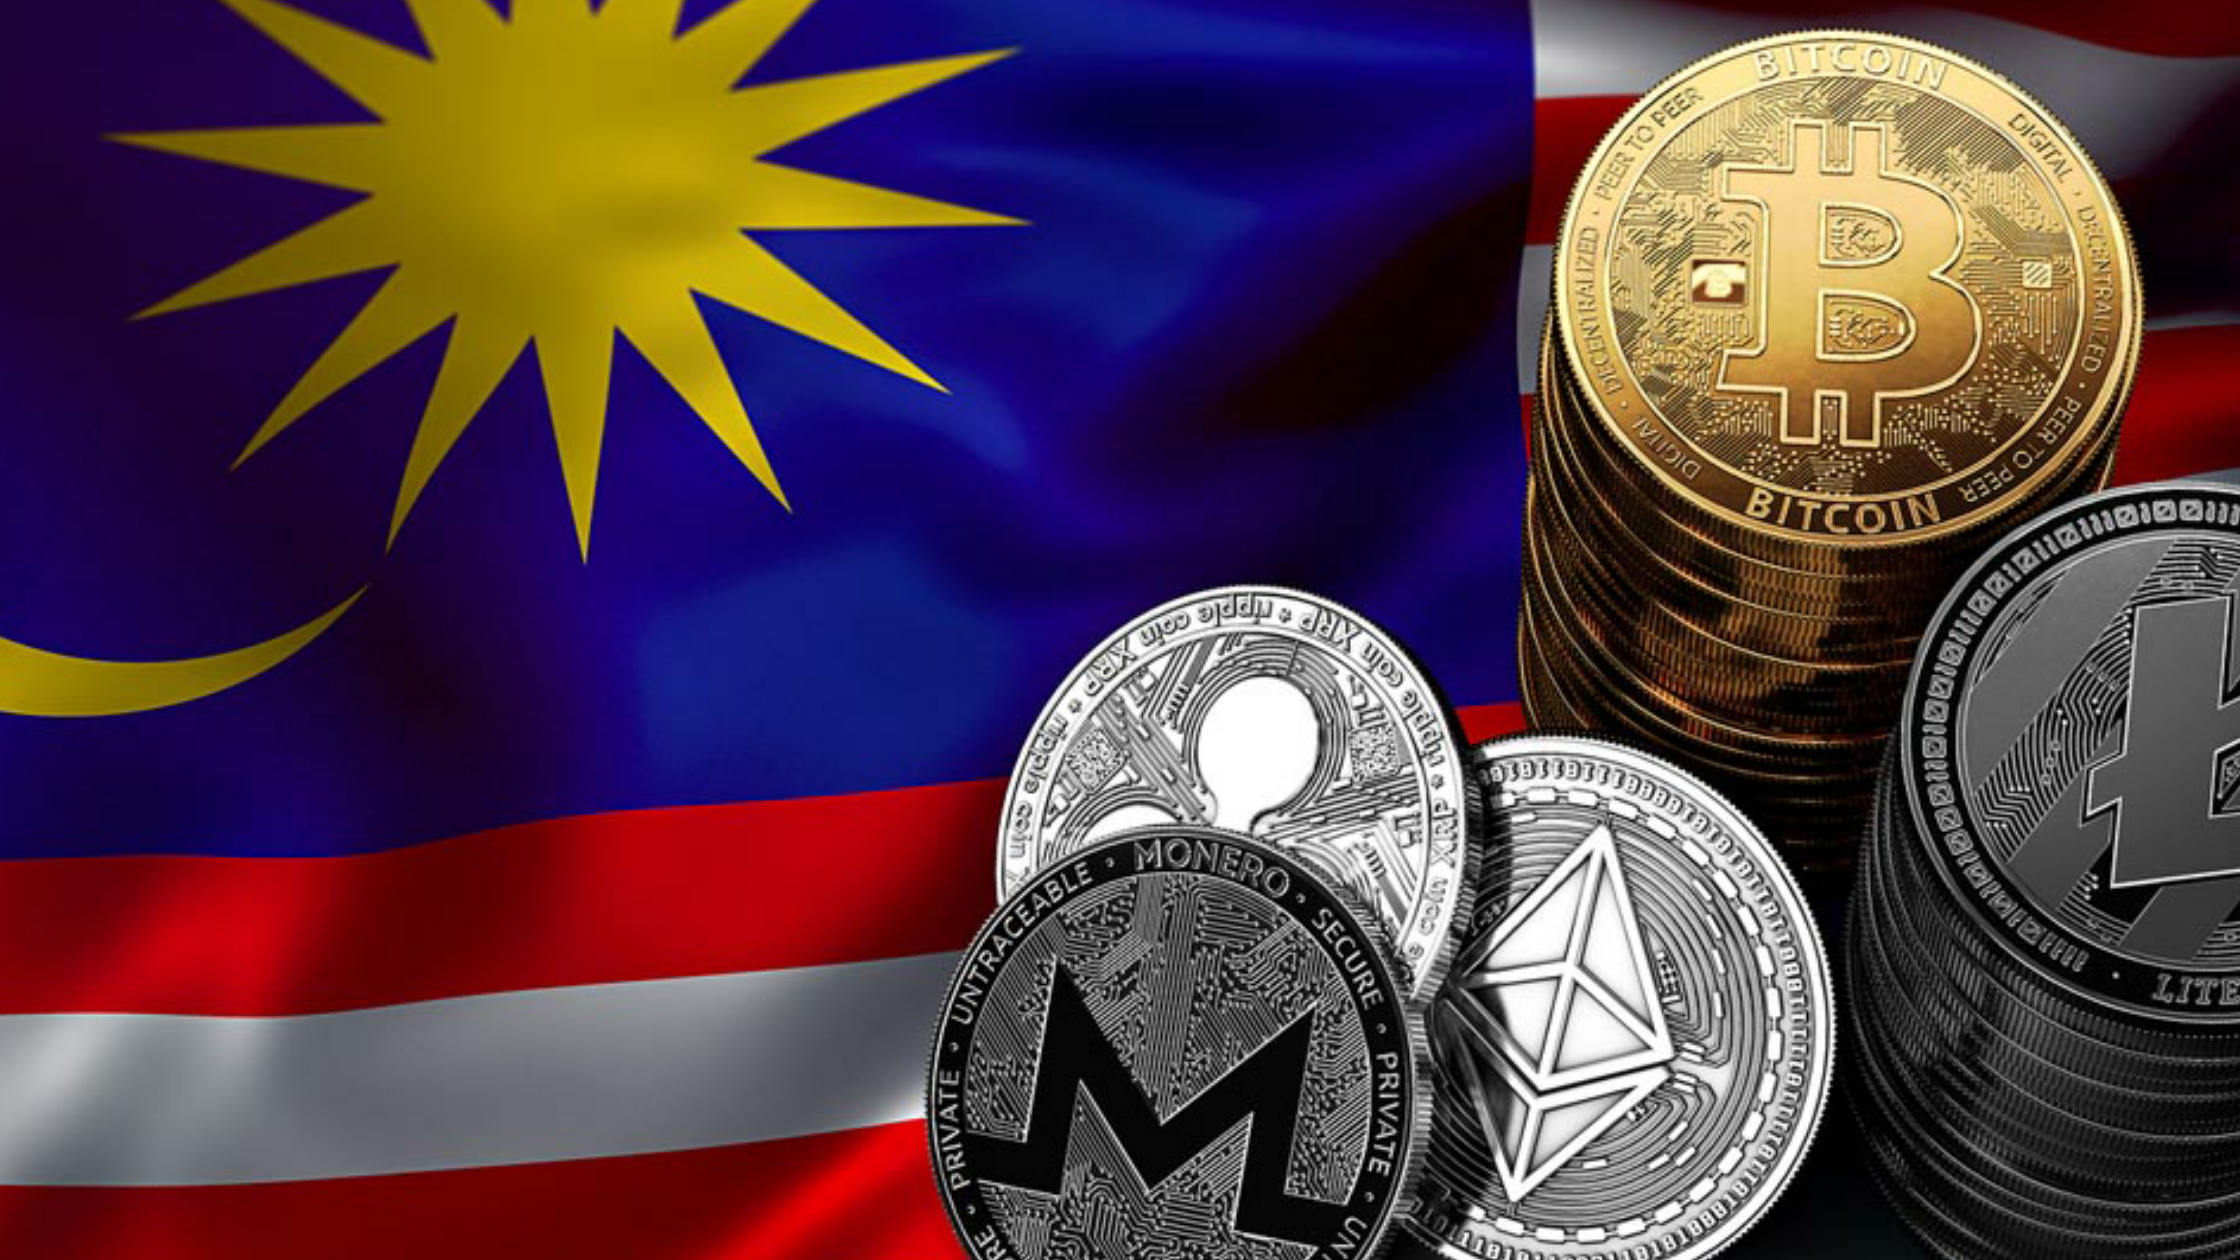 Malaysia Shariah Law and Bitcoin